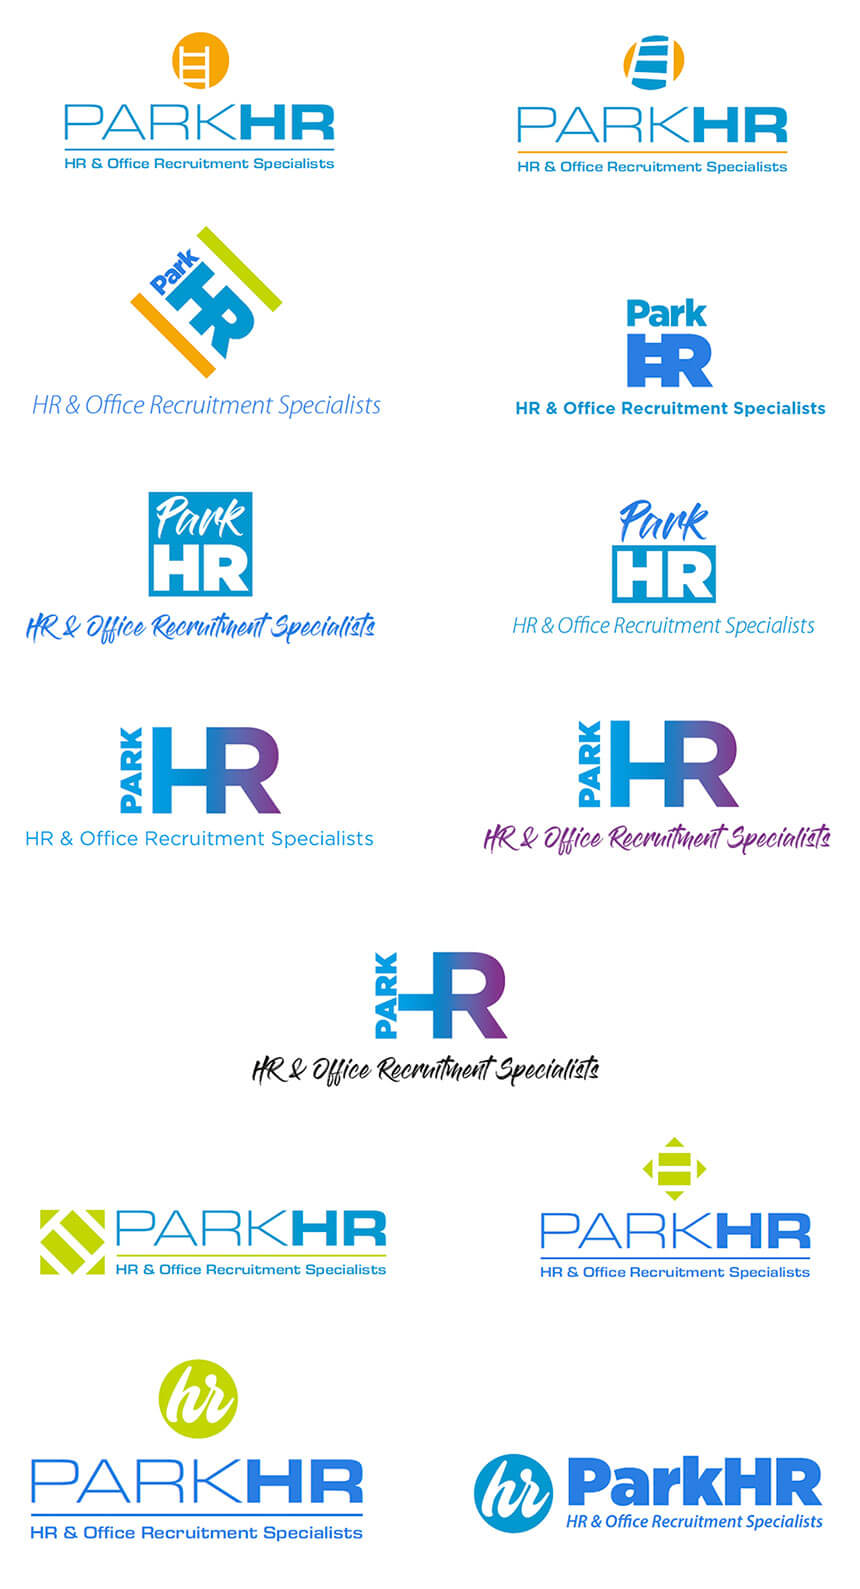 Park HR refined logo visuals, first draft